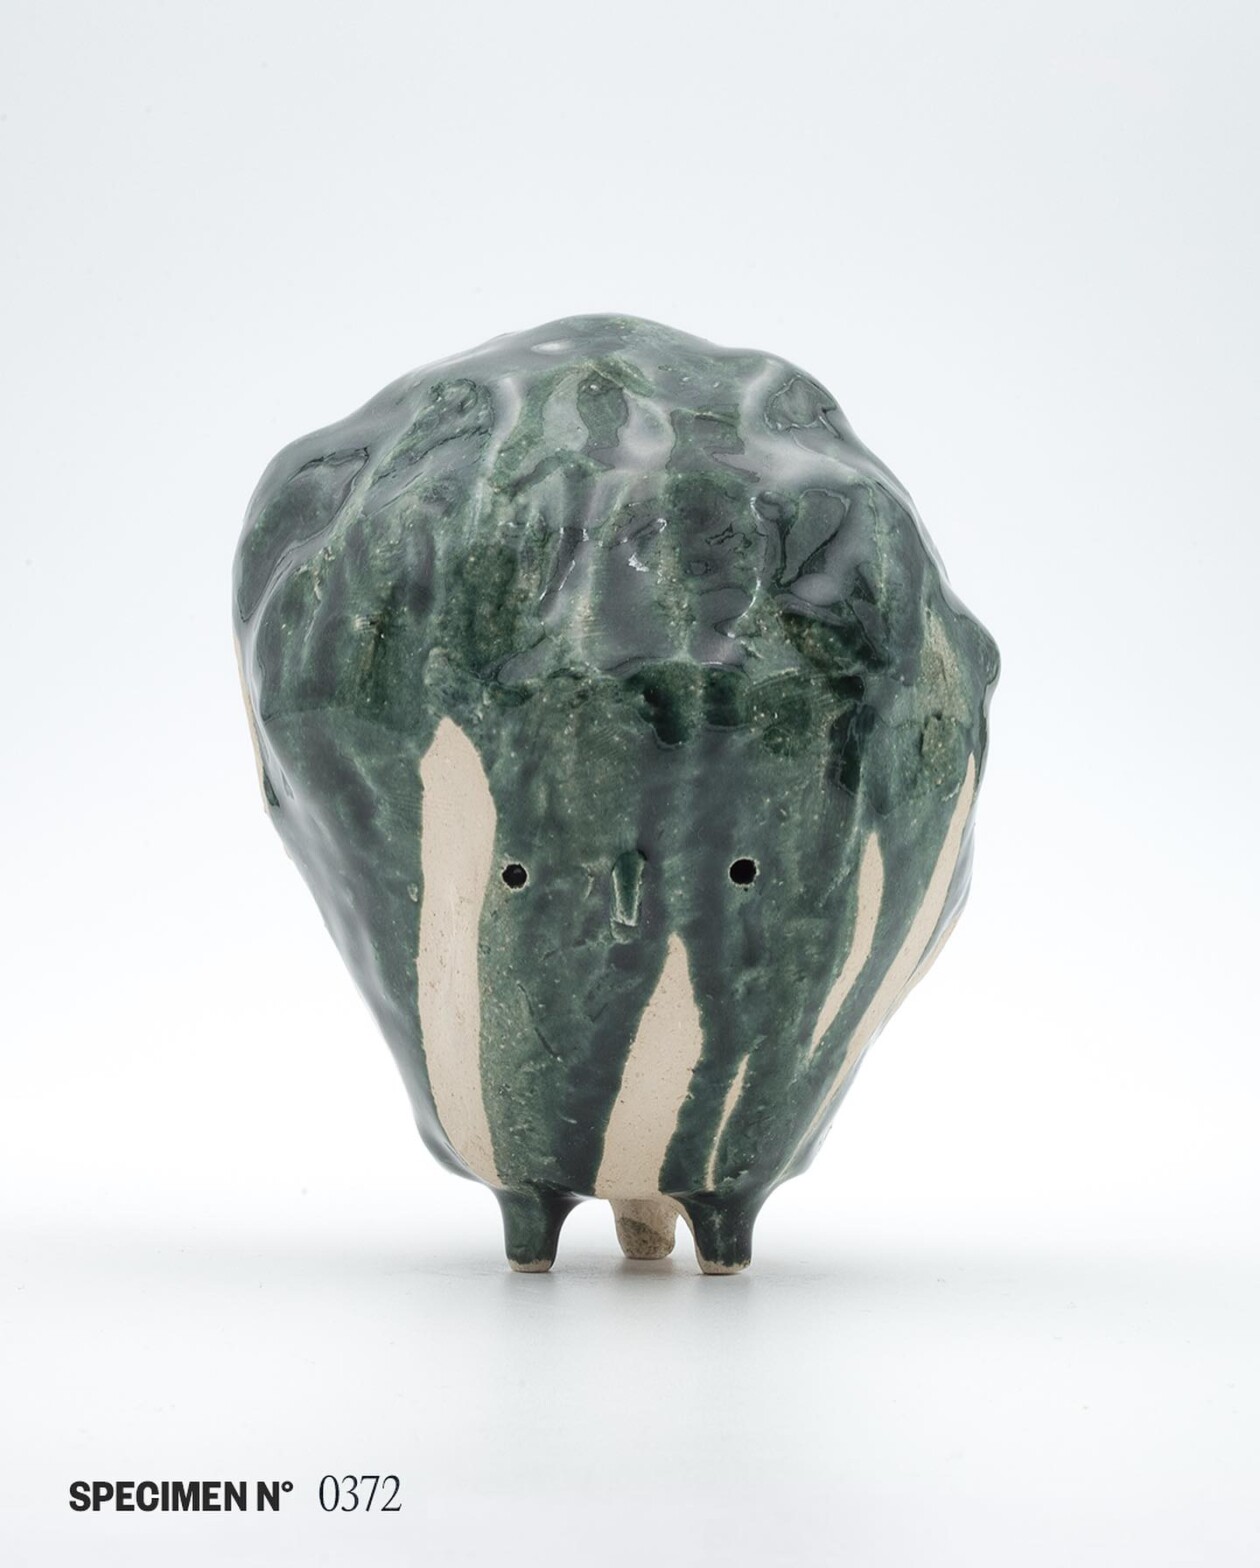 The Peculiar Blobby Ceramic Creatures Of Monsieur Cailloux (11)